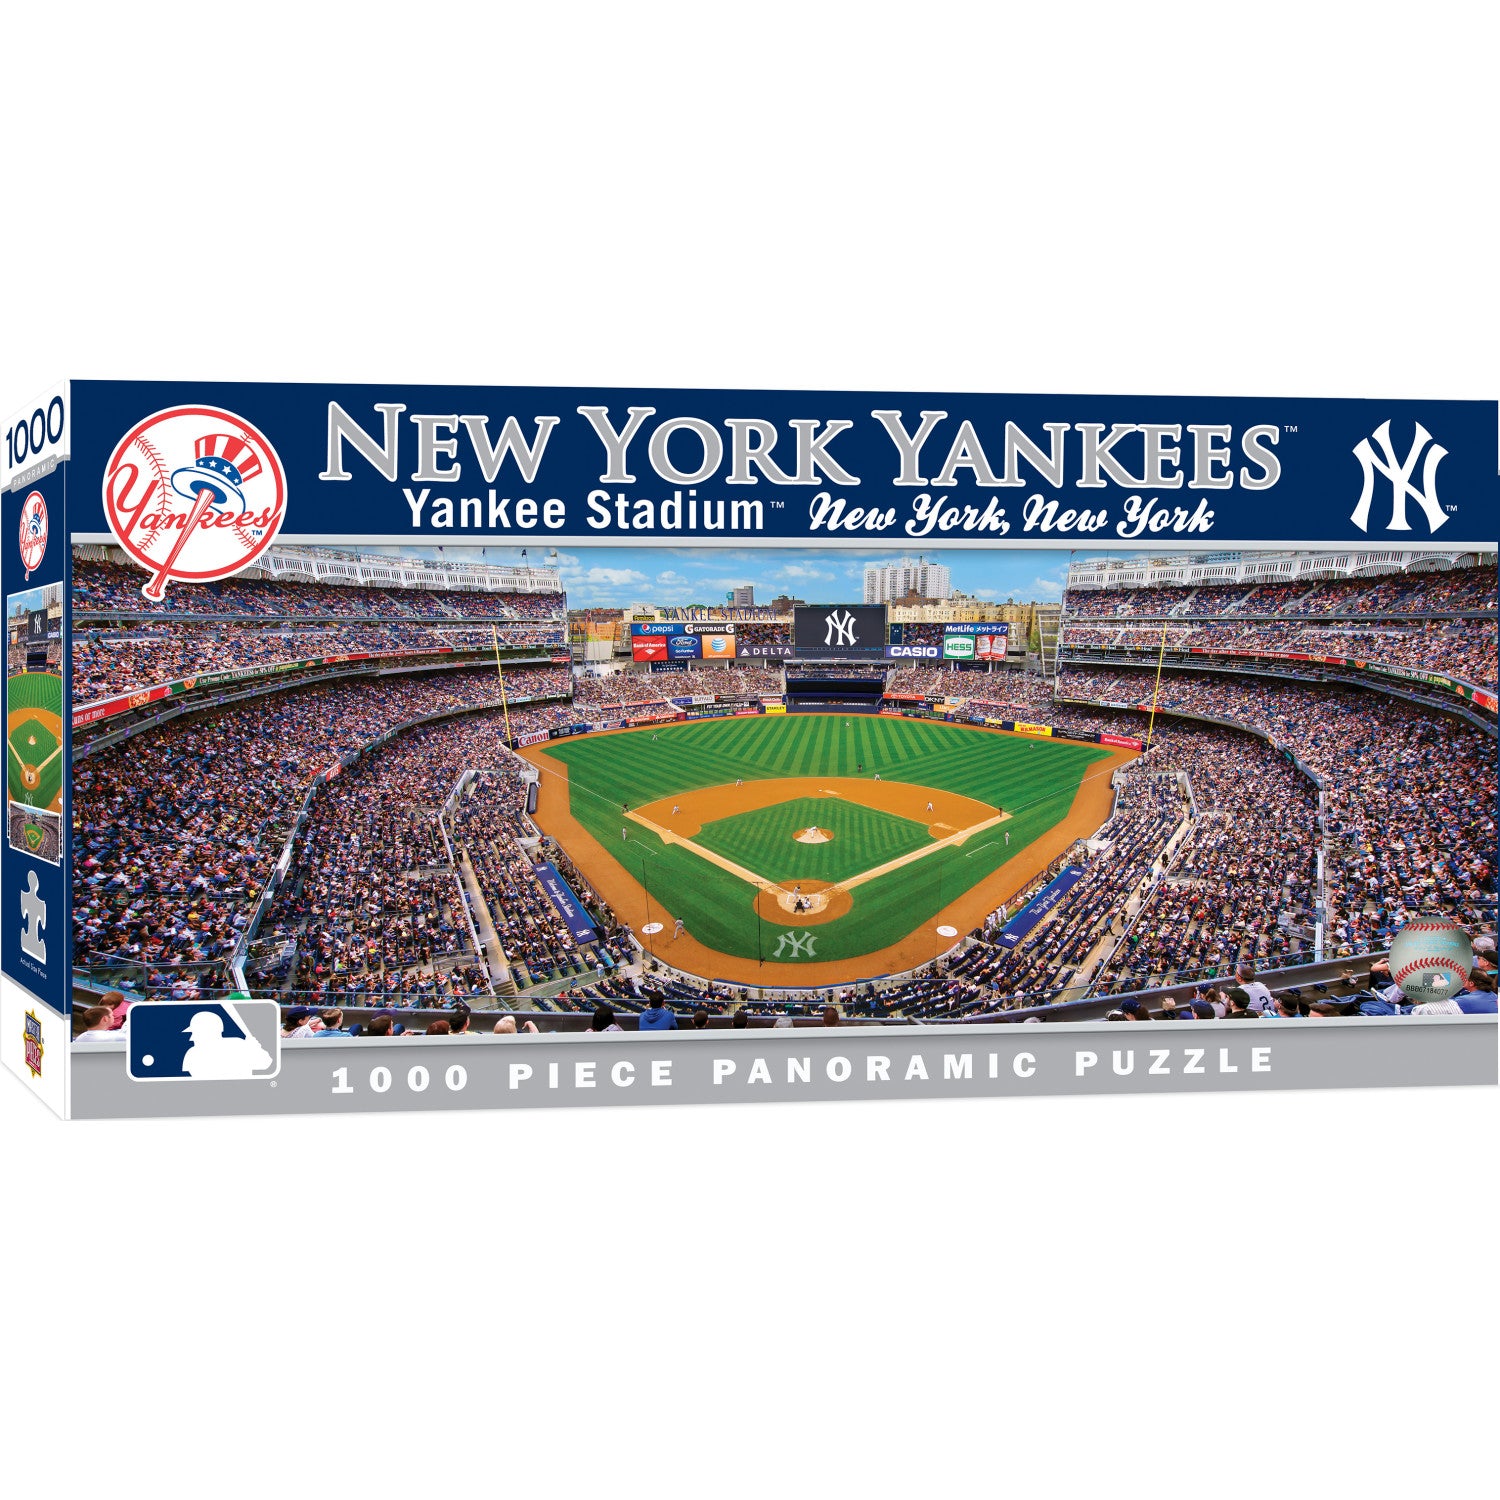 New York Yankees - 1000 Piece Panoramic Jigsaw Puzzle